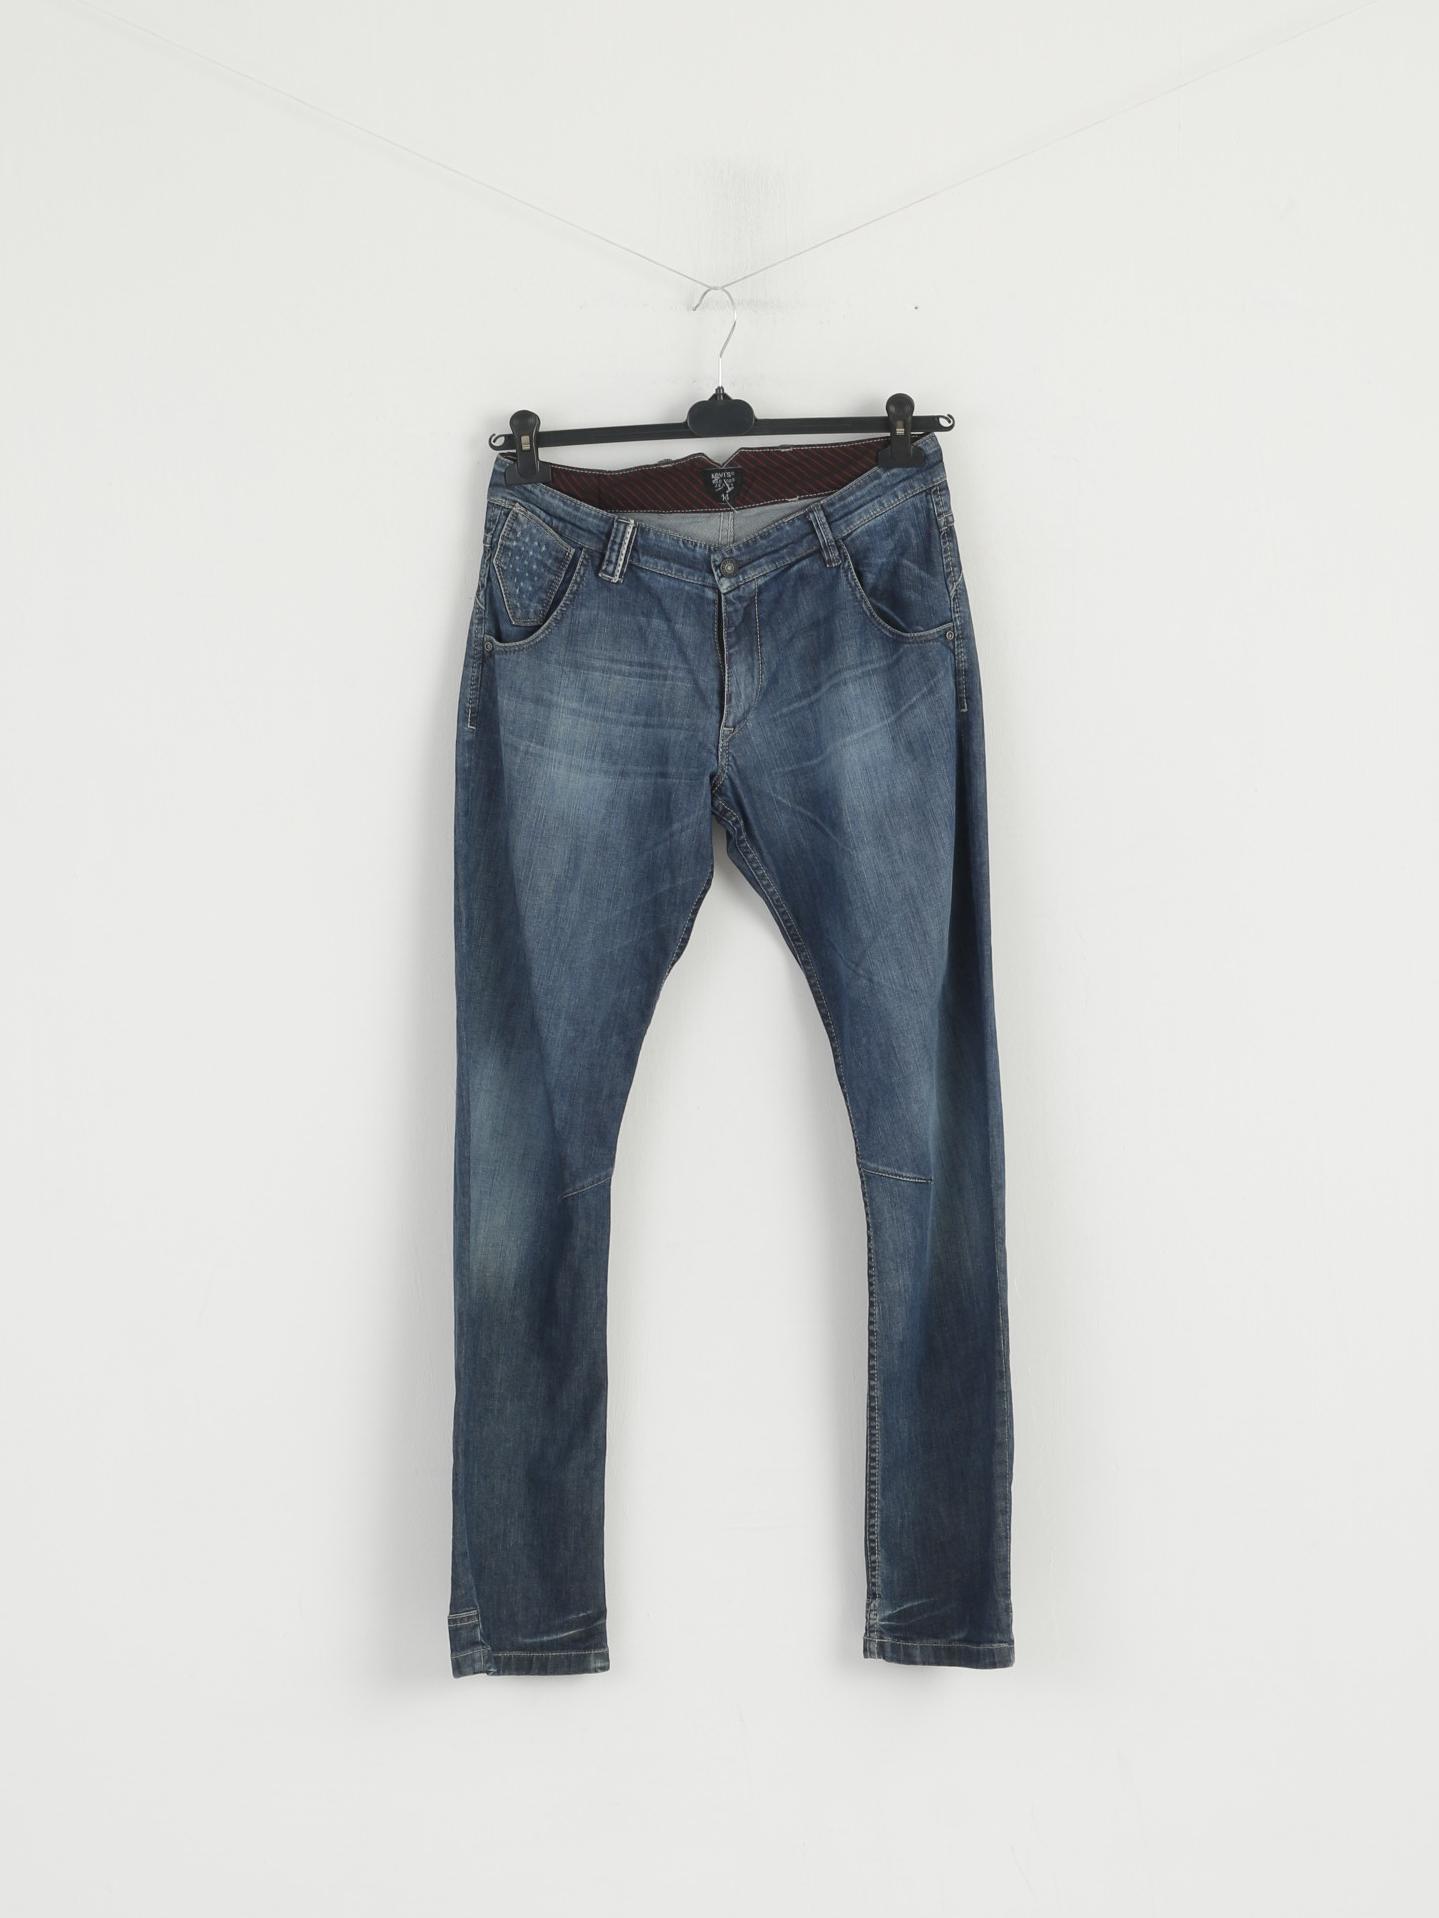 Levi's Red Tab Youth 14 Age Jeans Pantaloni Pantaloni classici in denim blu di cotone